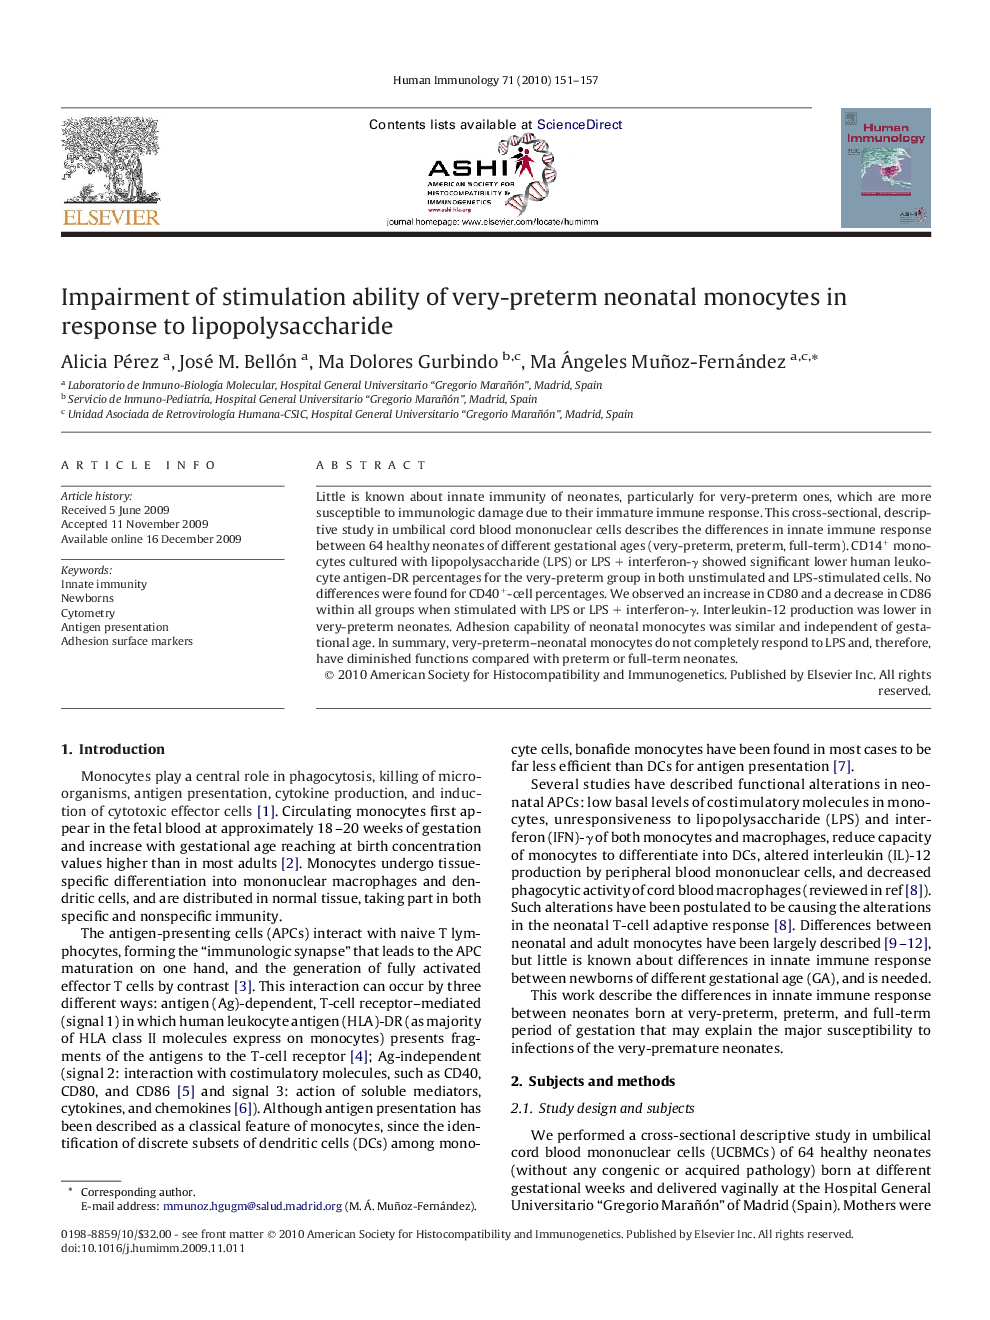 Impairment of stimulation ability of very-preterm neonatal monocytes in response to lipopolysaccharide